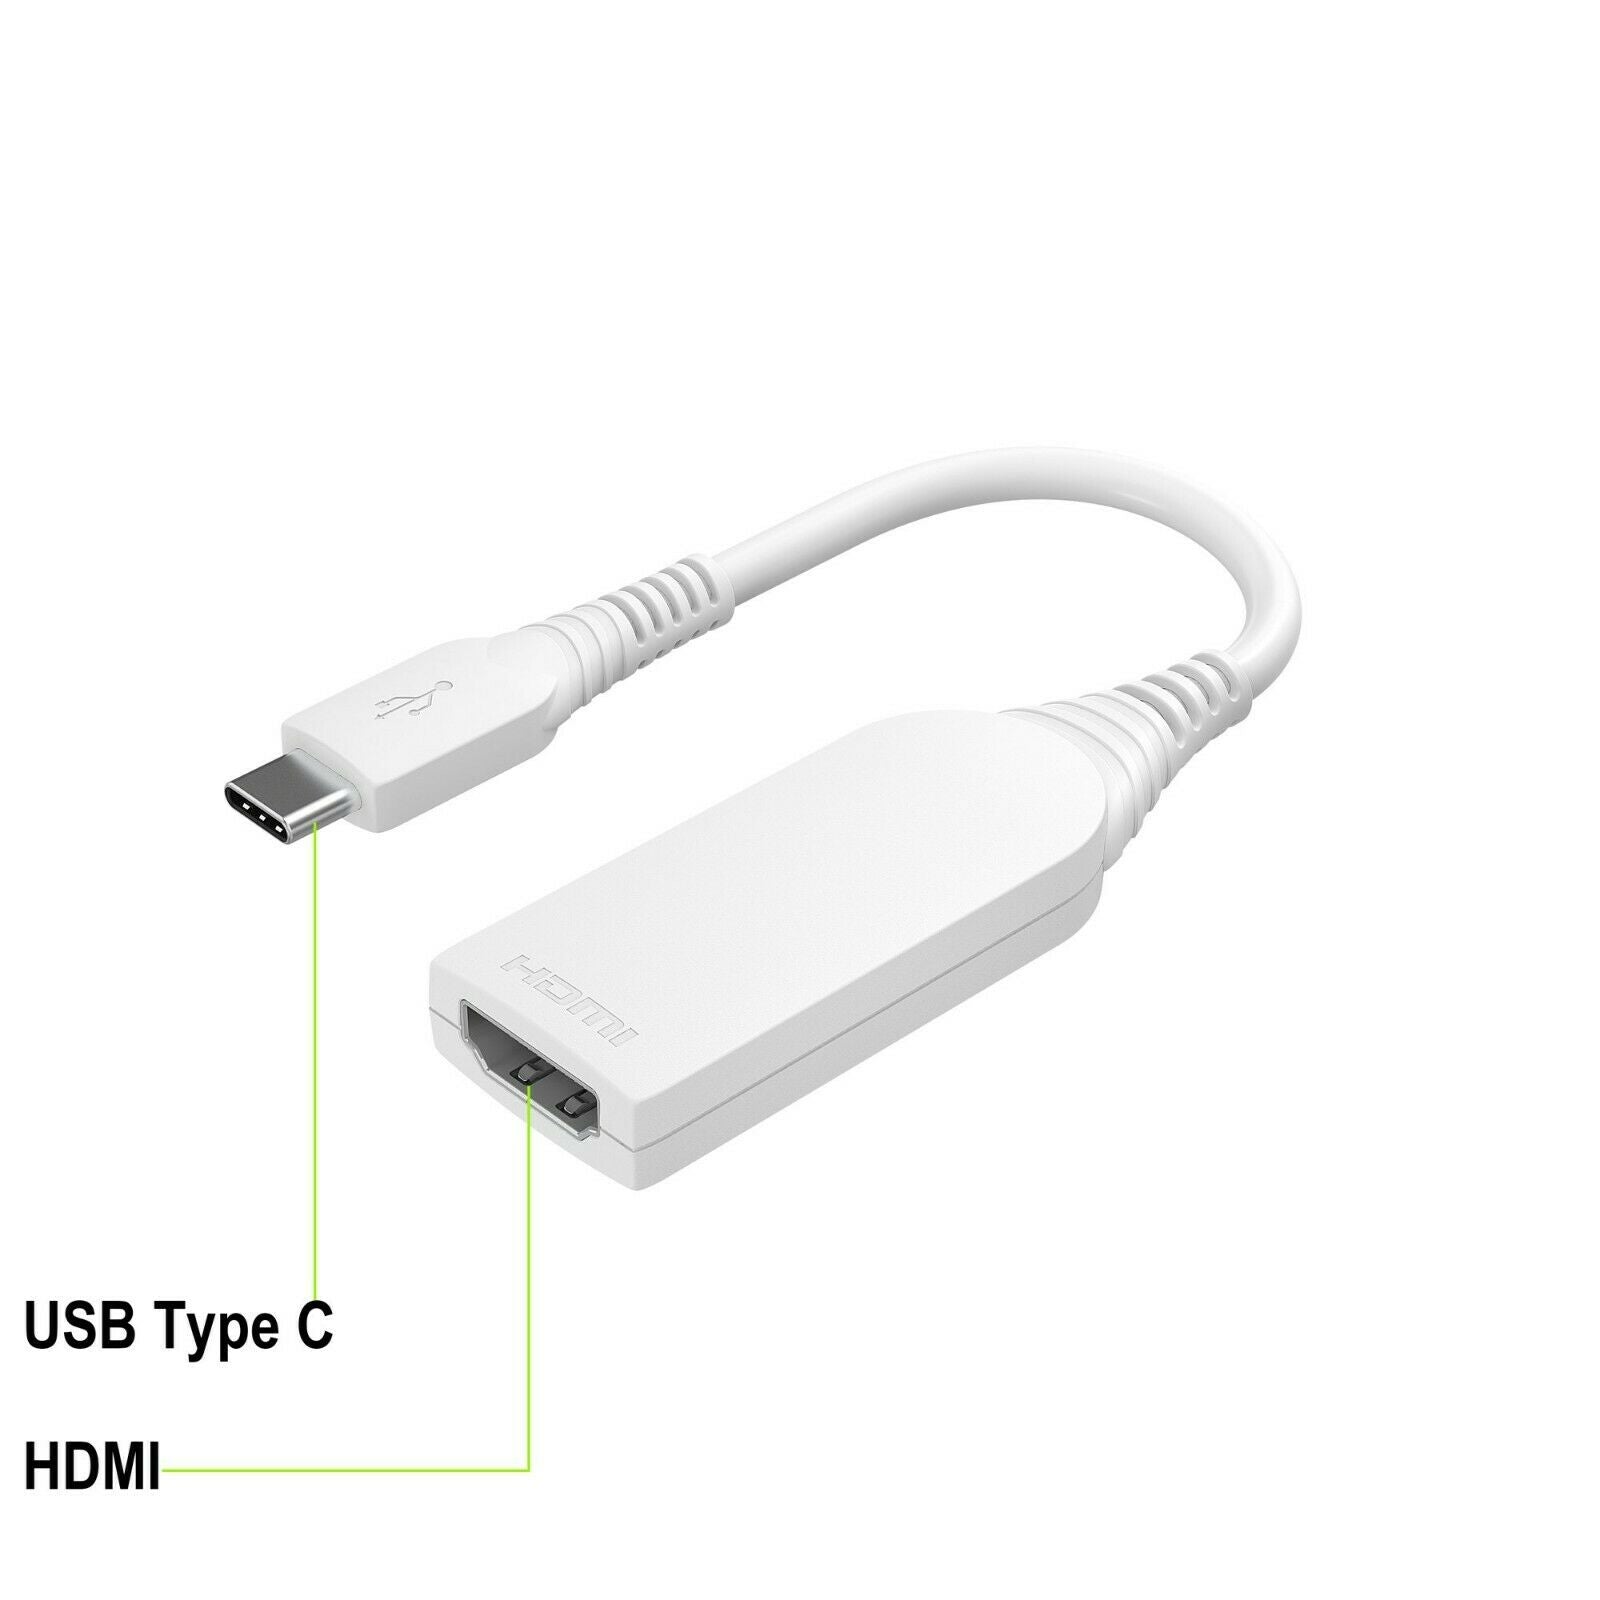 Onn USB-C to HDMI Adapter (Digital AV), Stream Your Video/TV/Streaming Services